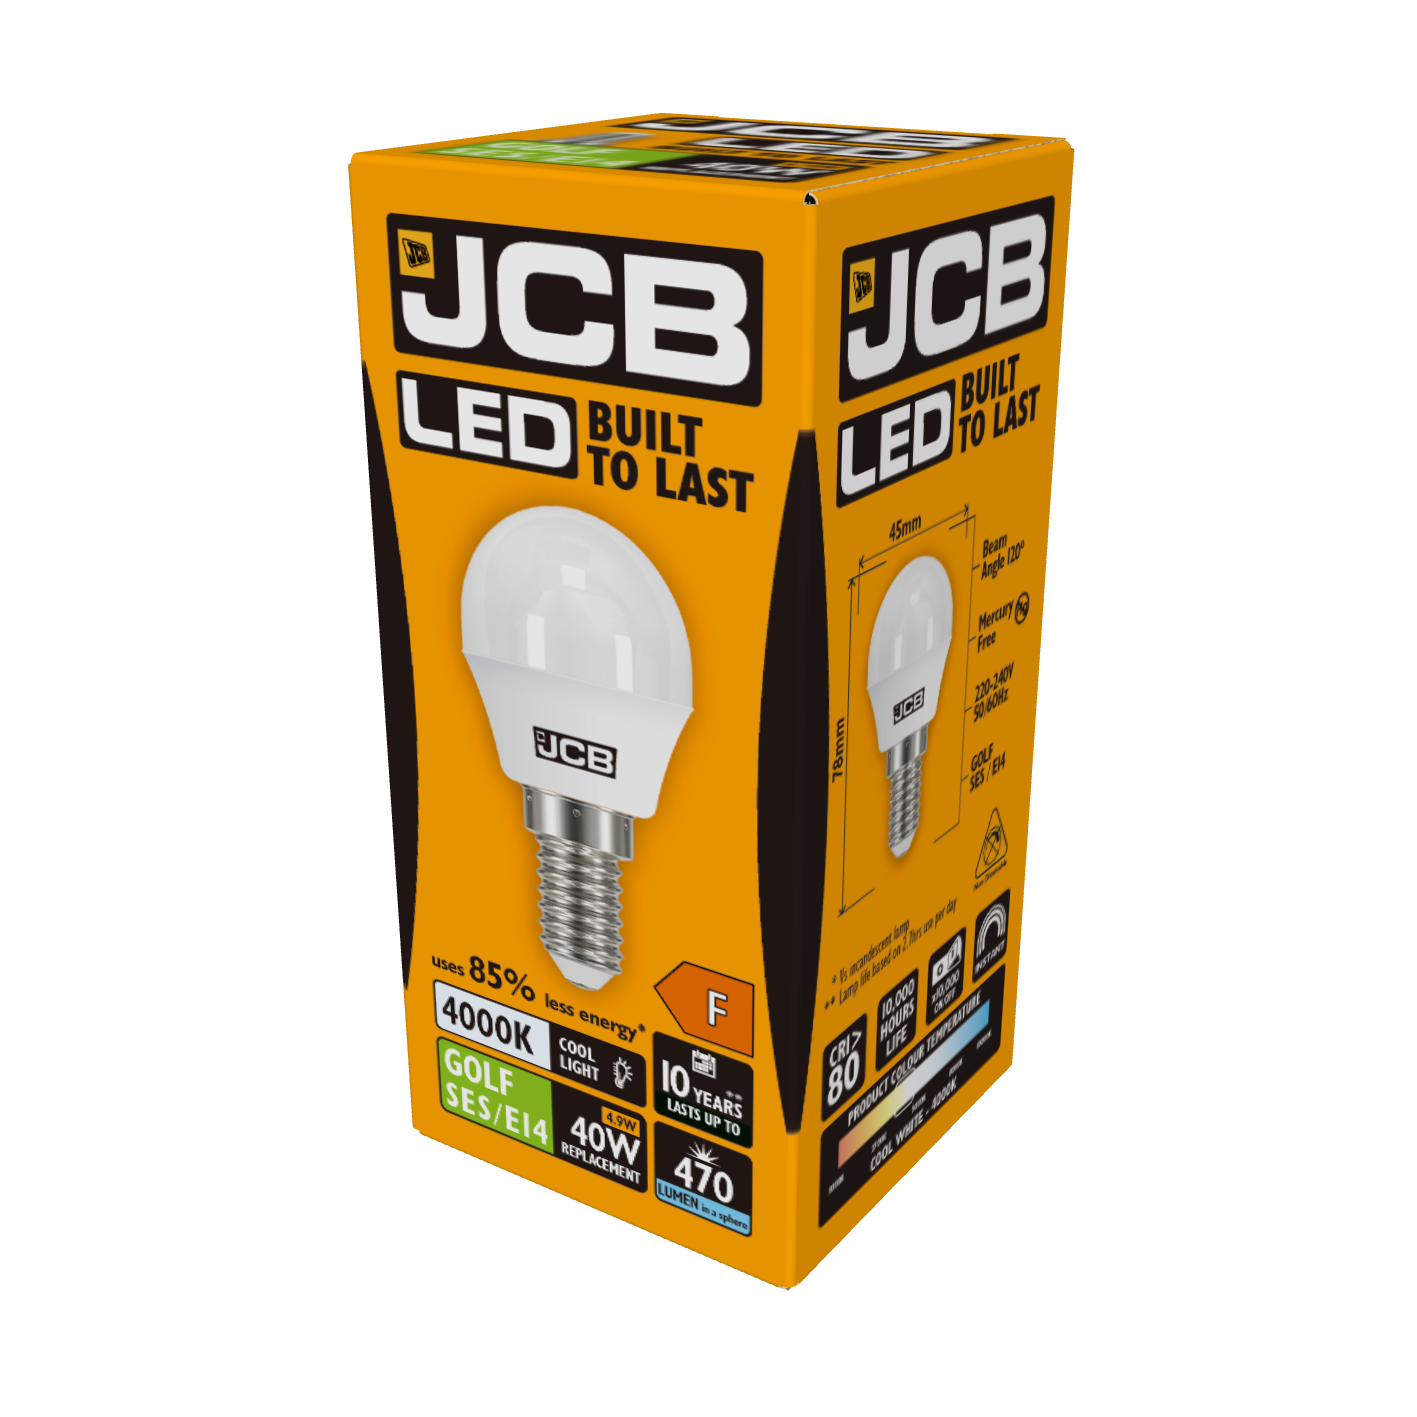 JCB LED Golf E14 (SES) 470lm 4.9W 4,000K (Cool White), Box of 1